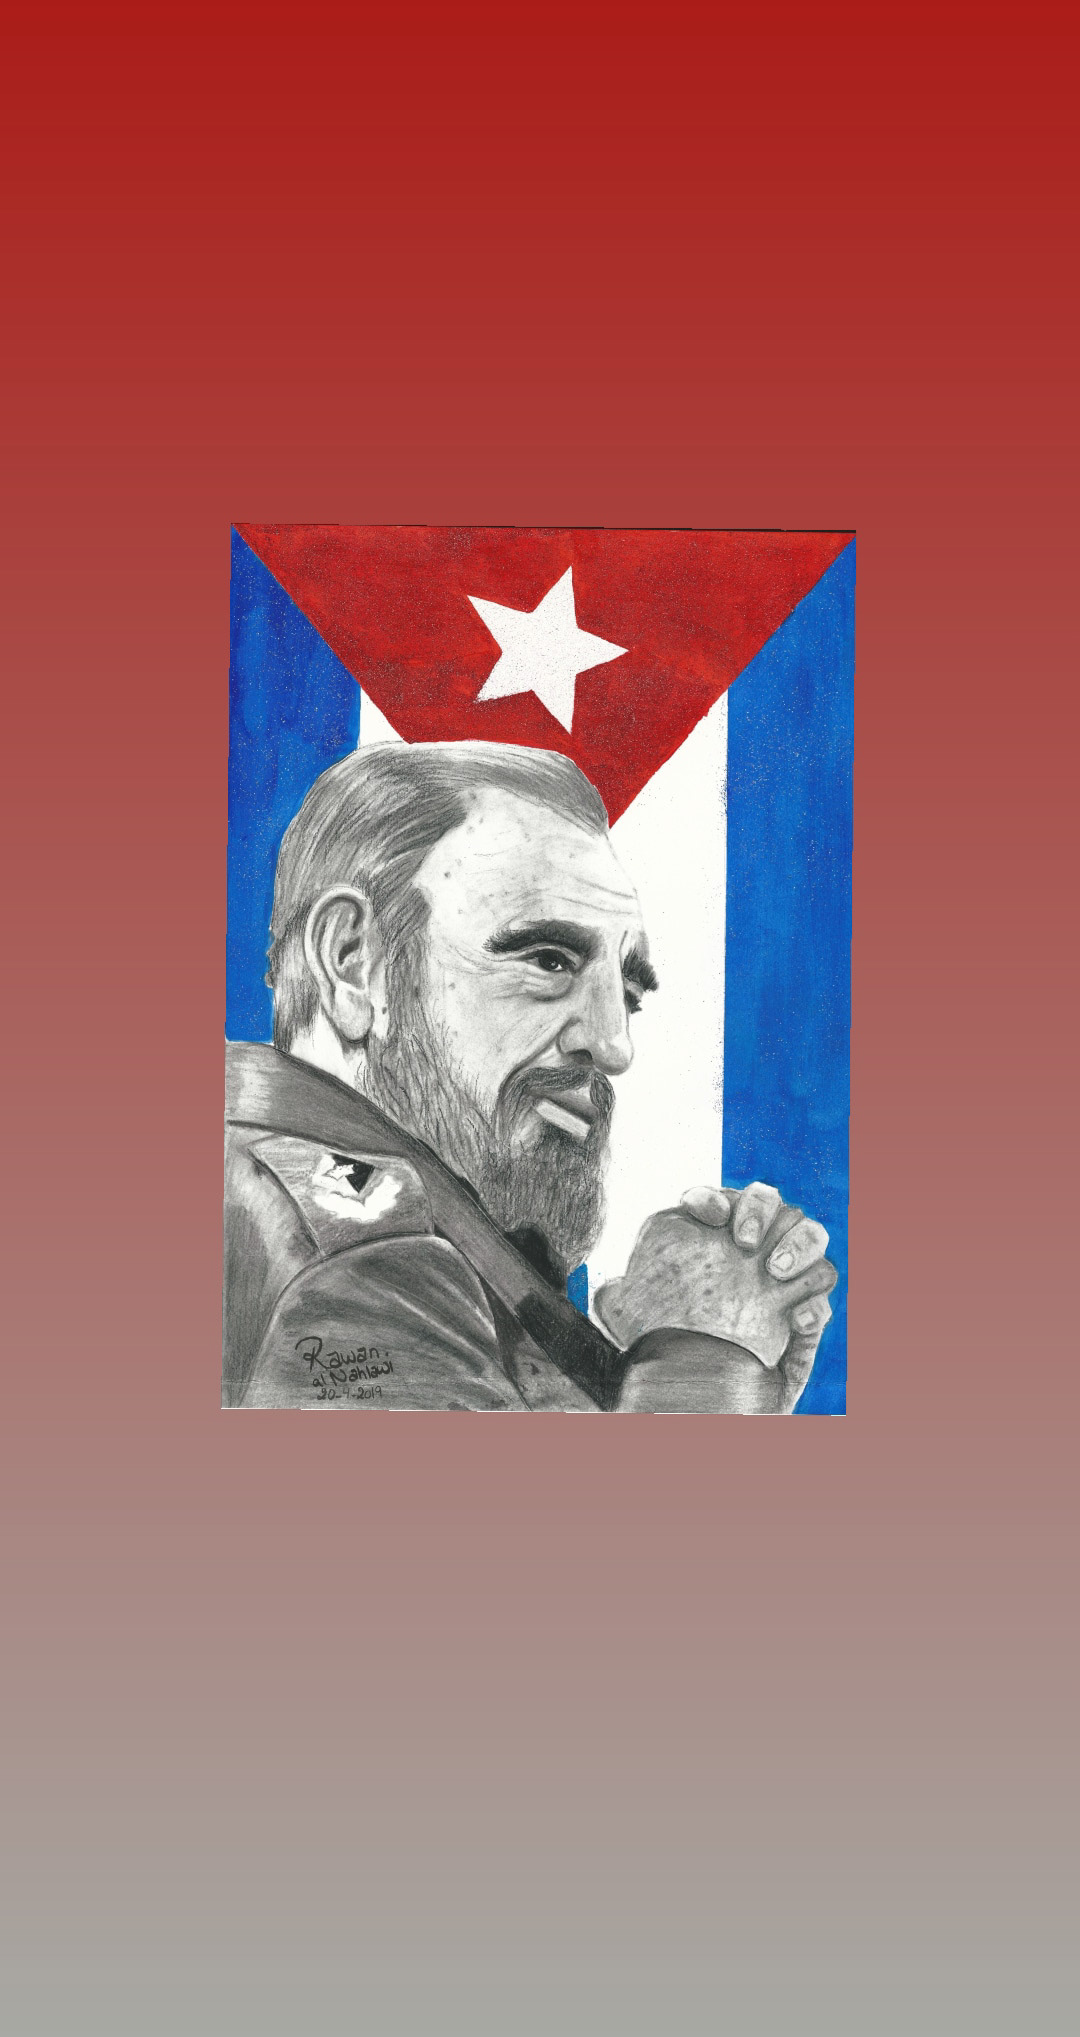 #cubanrevolution